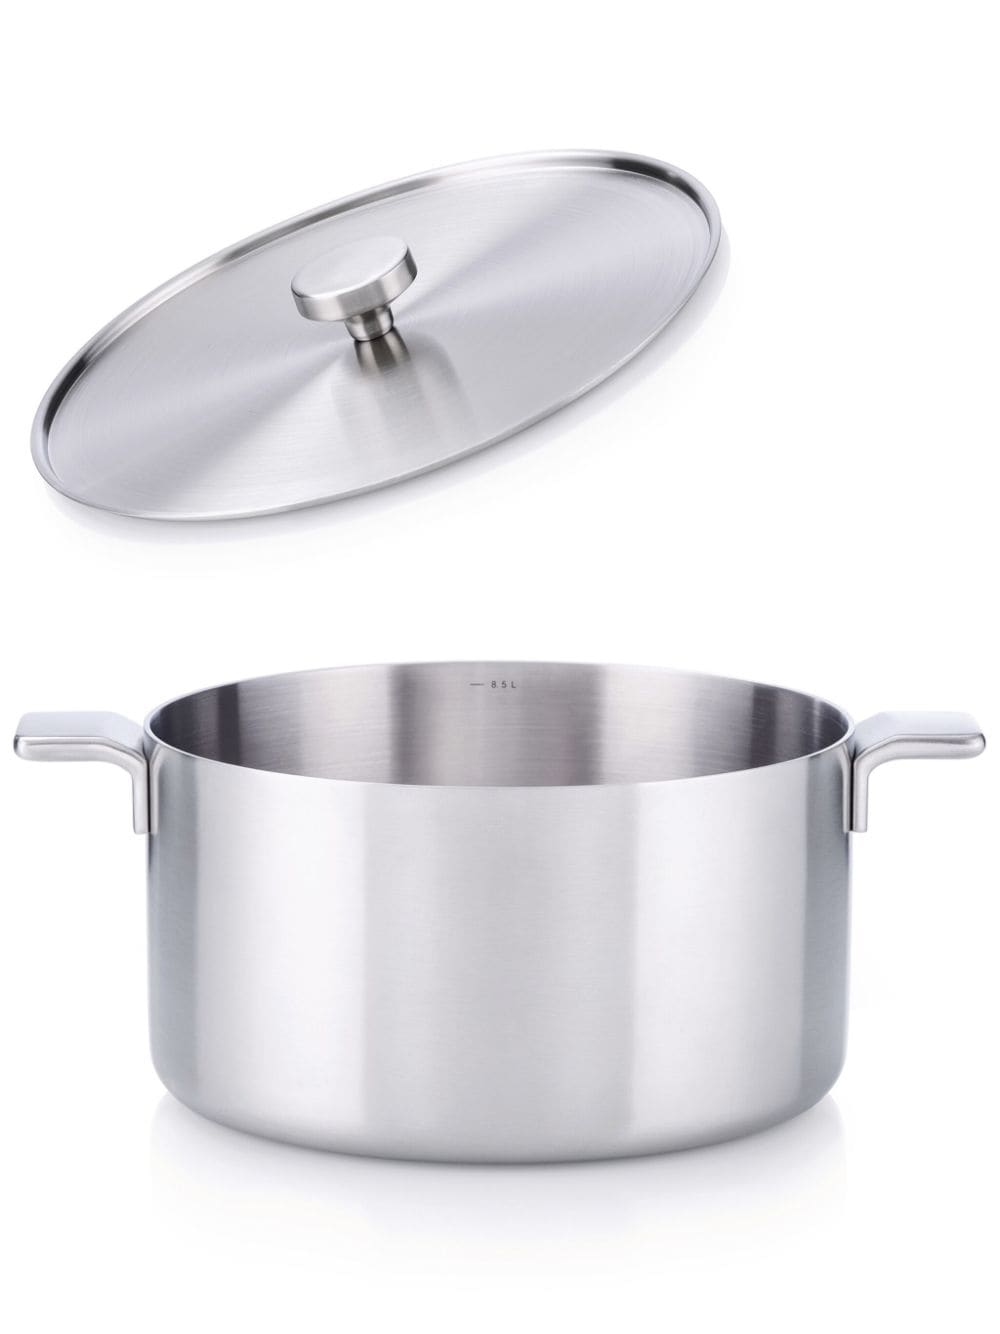 Alessi two-handle stainless steel casserole (20cm) - Silver von Alessi